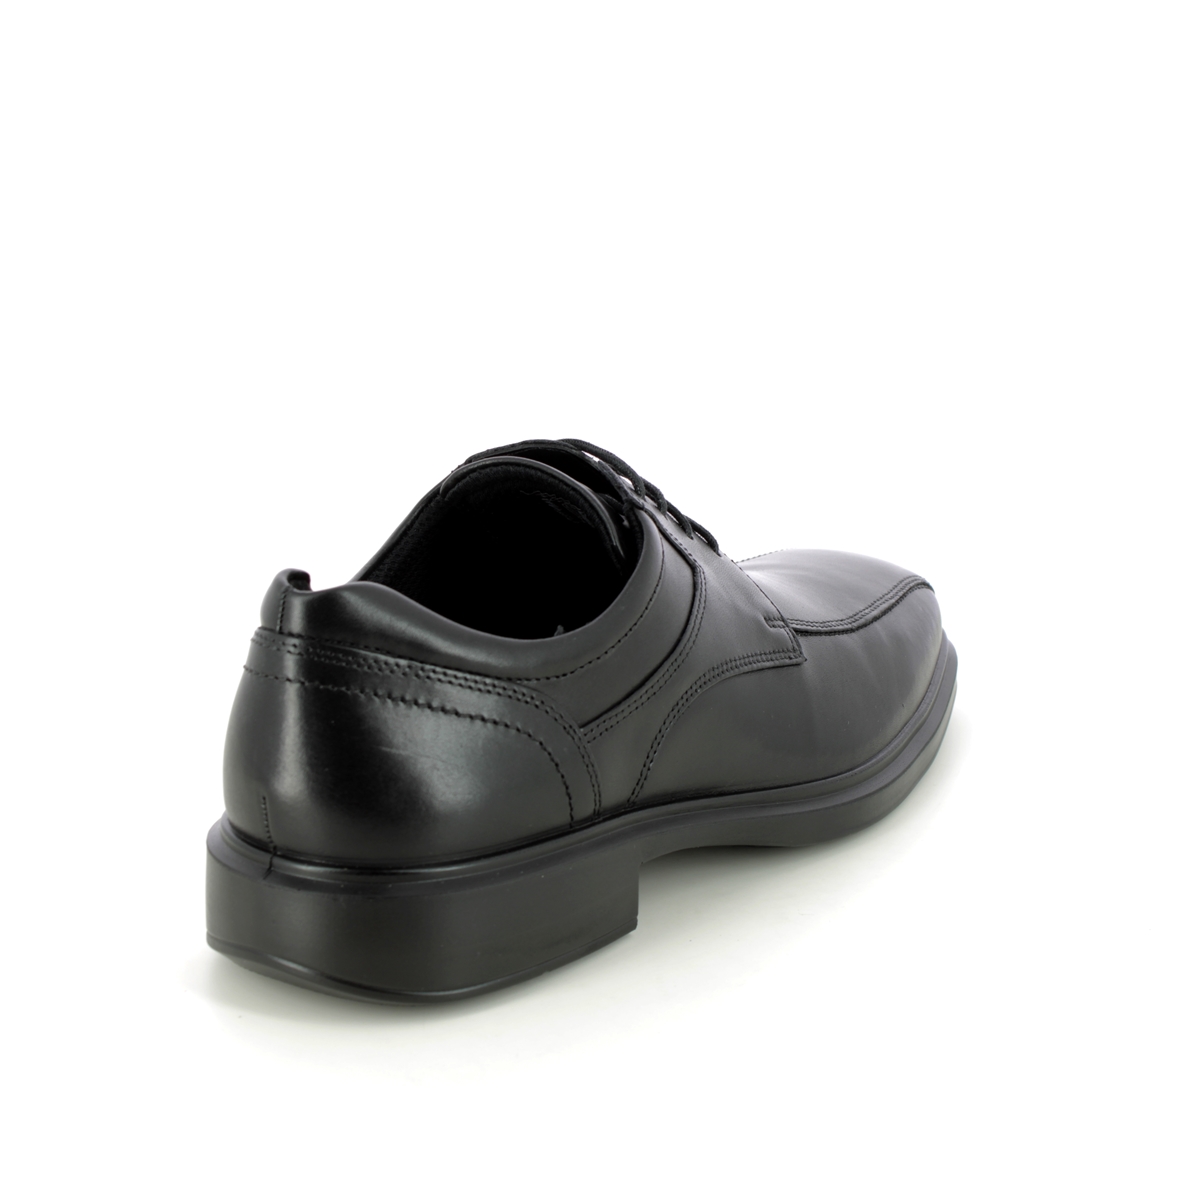 ECCO Helsinki 2 Tram Black leather Mens formal shoes 500174-01001